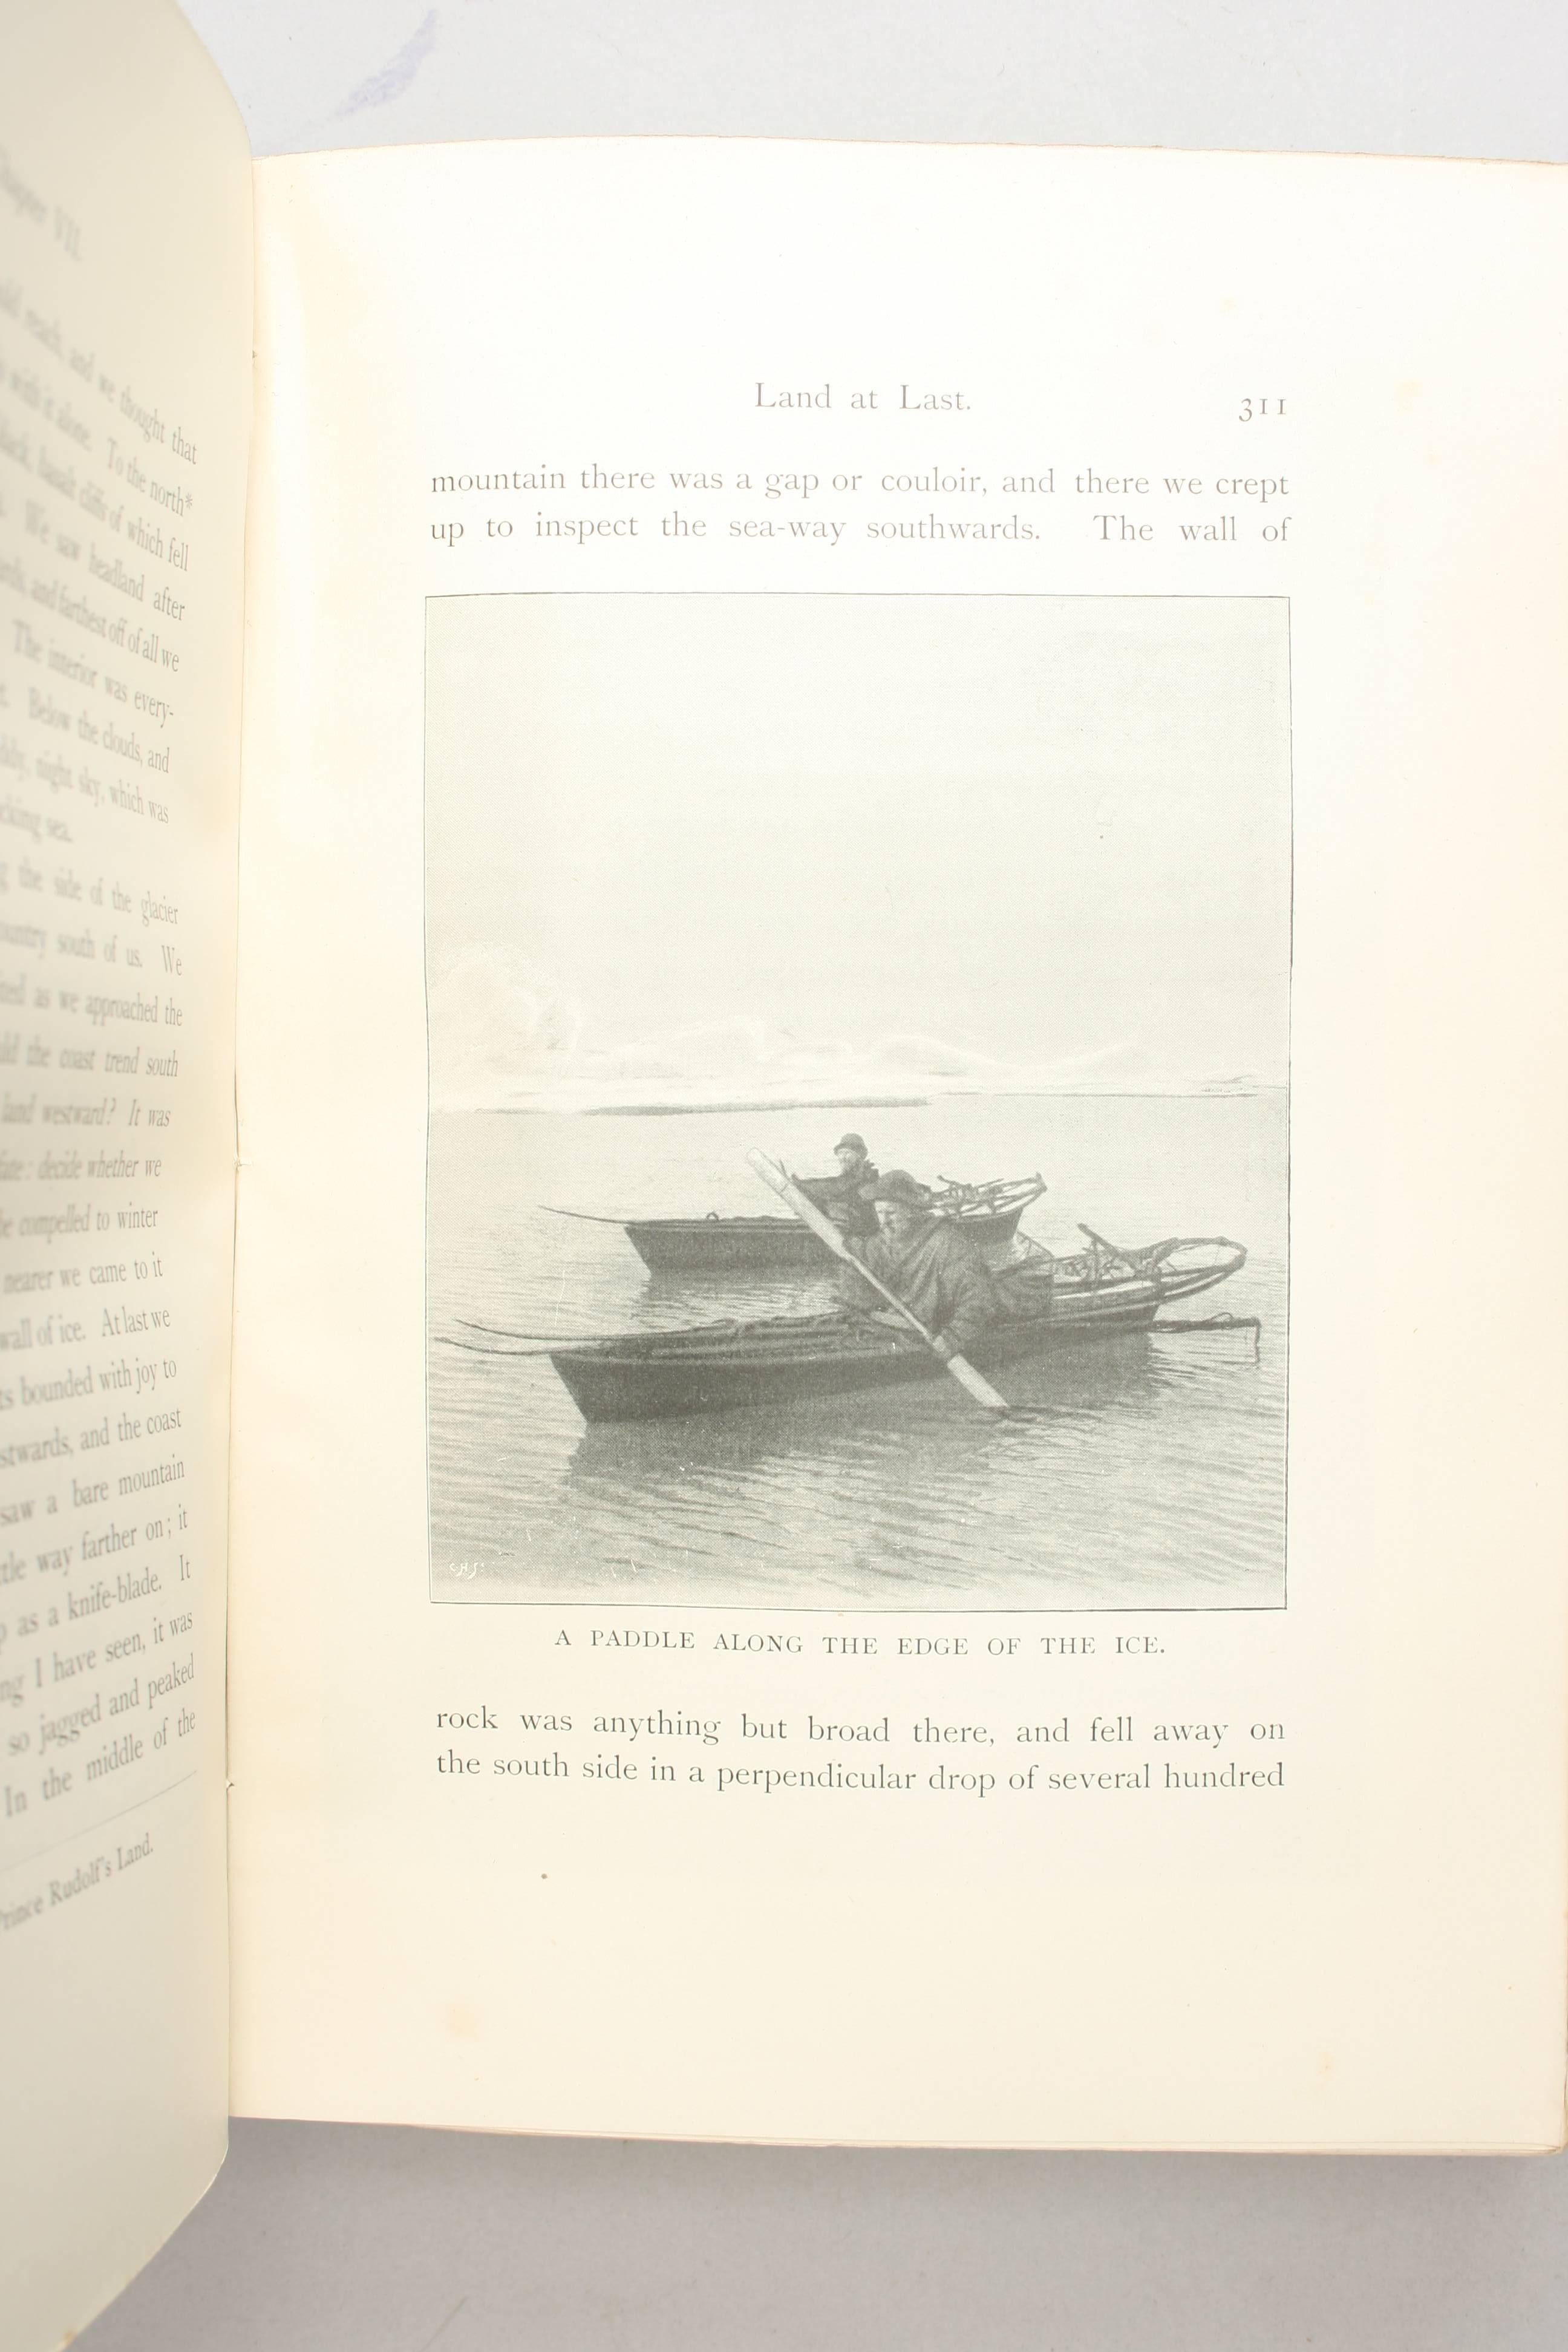 Voyage and Exploration Books, Fridtjof Nansen 2